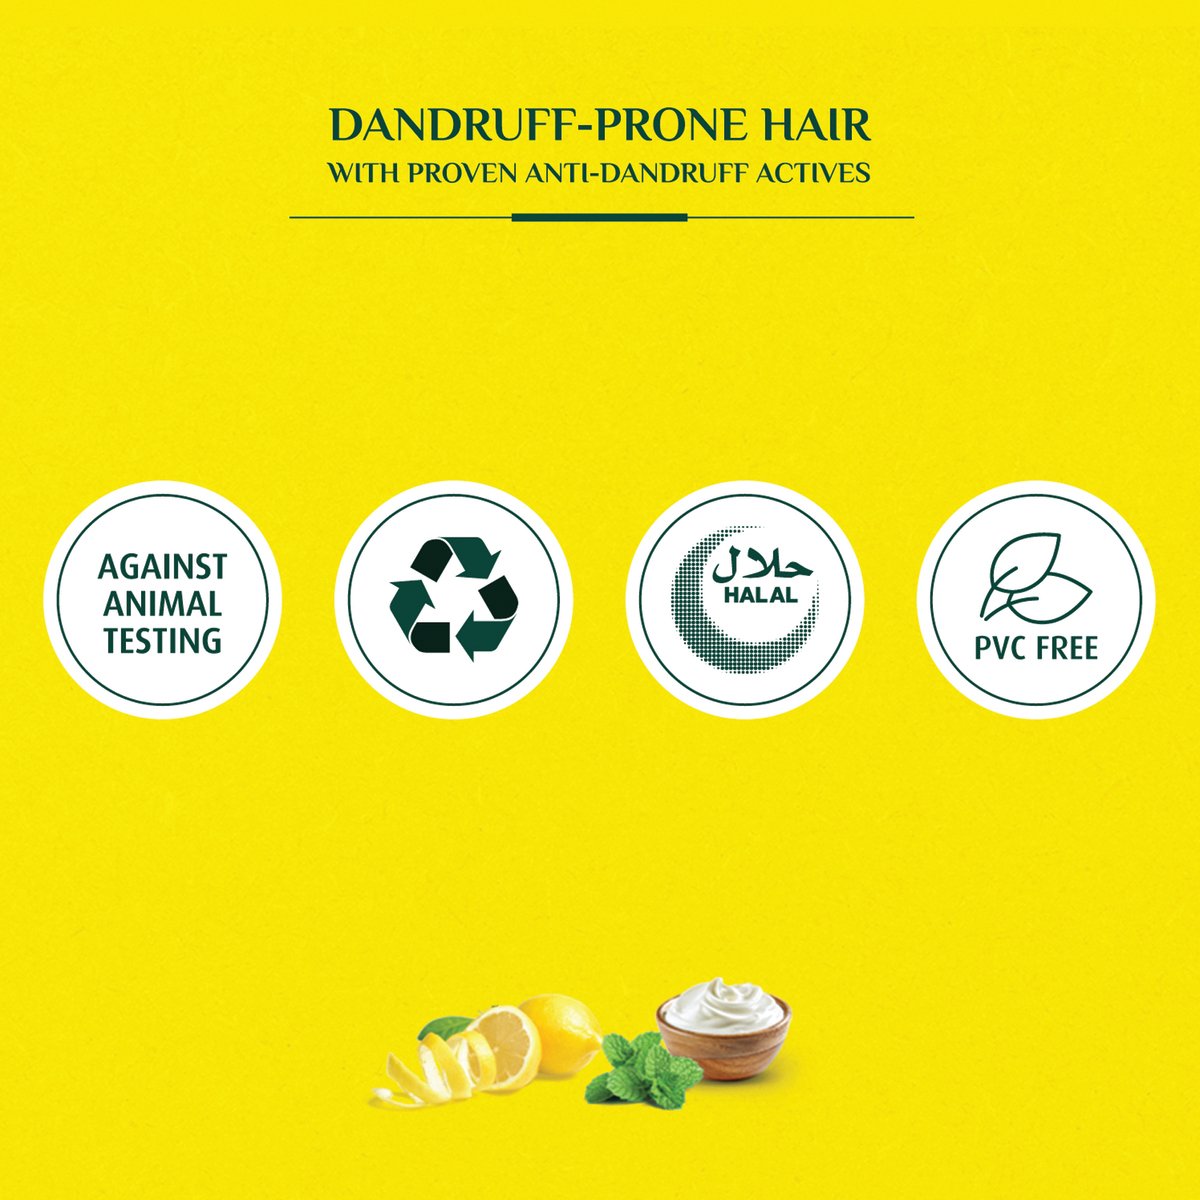 Vatika Naturals Dandruff Guard Shampoo Lemon & Yoghurt Removes Dandruff From First Wash, 400 ml